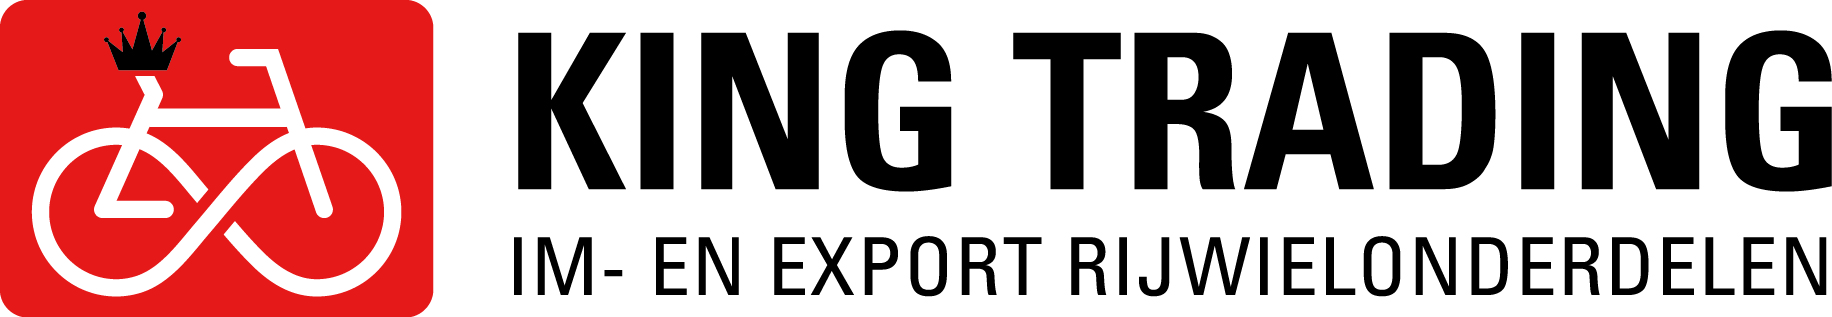 King Trading_Logo definitief_contouren